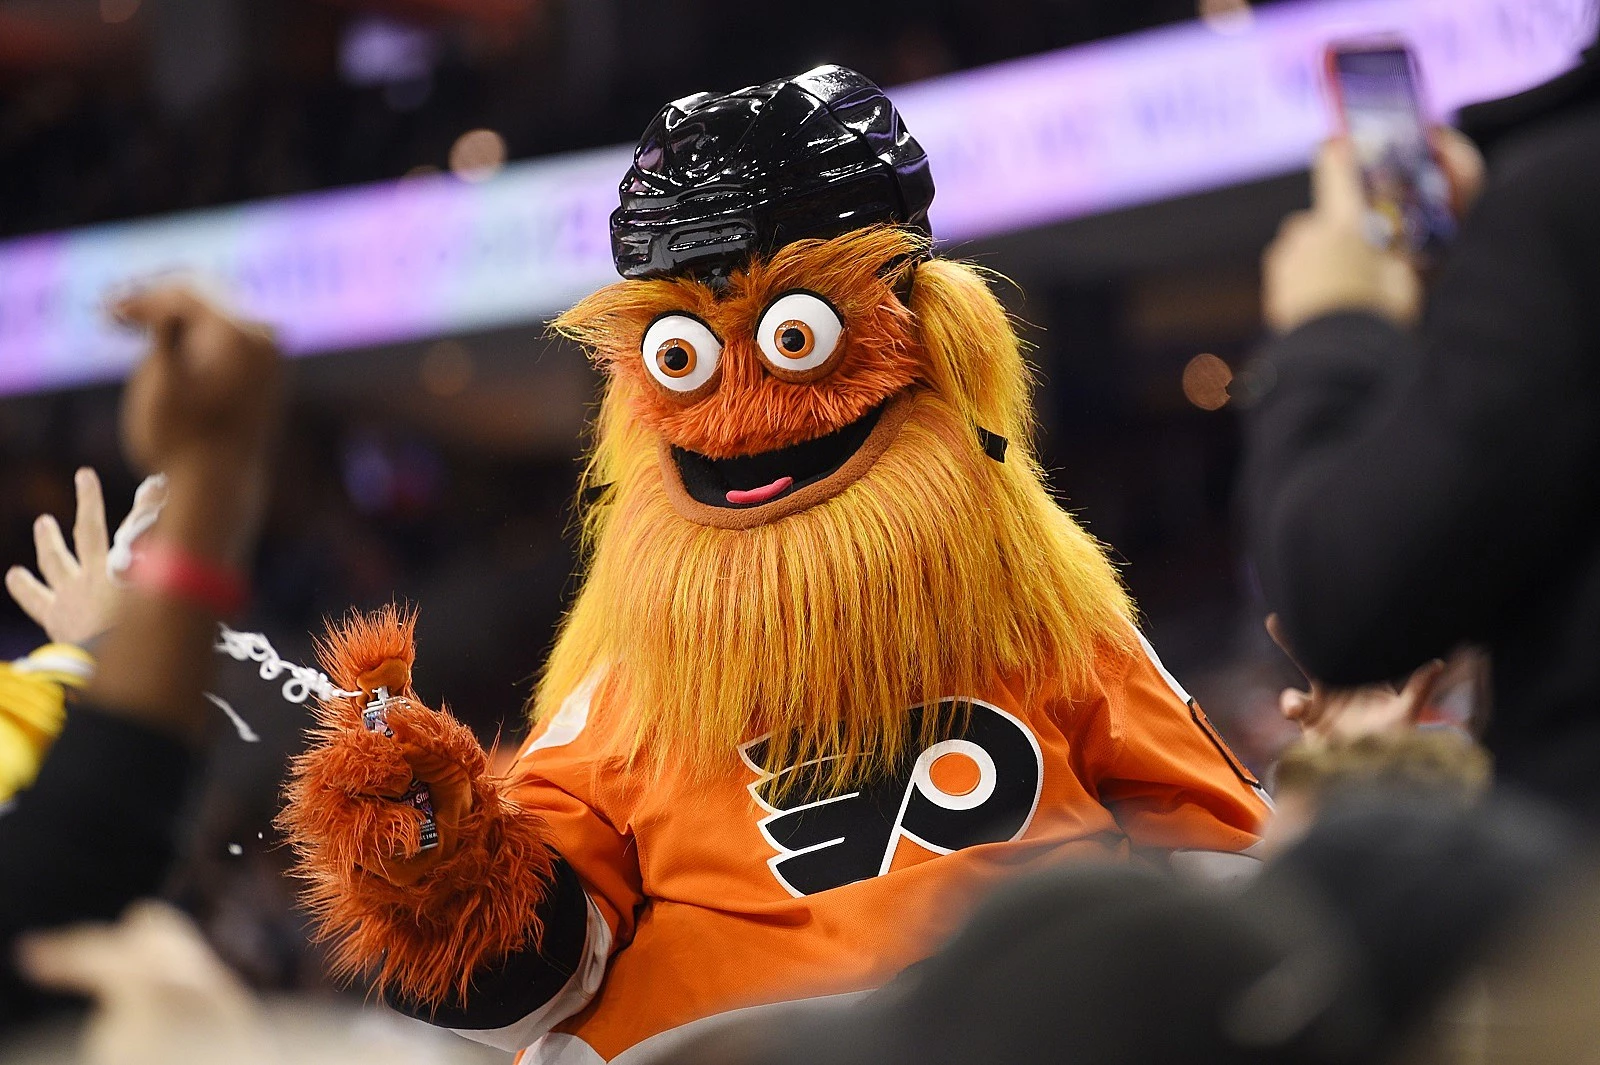 Philadelphia Flyers Gritty 10 Mascot Plush Figure (Home Uniform